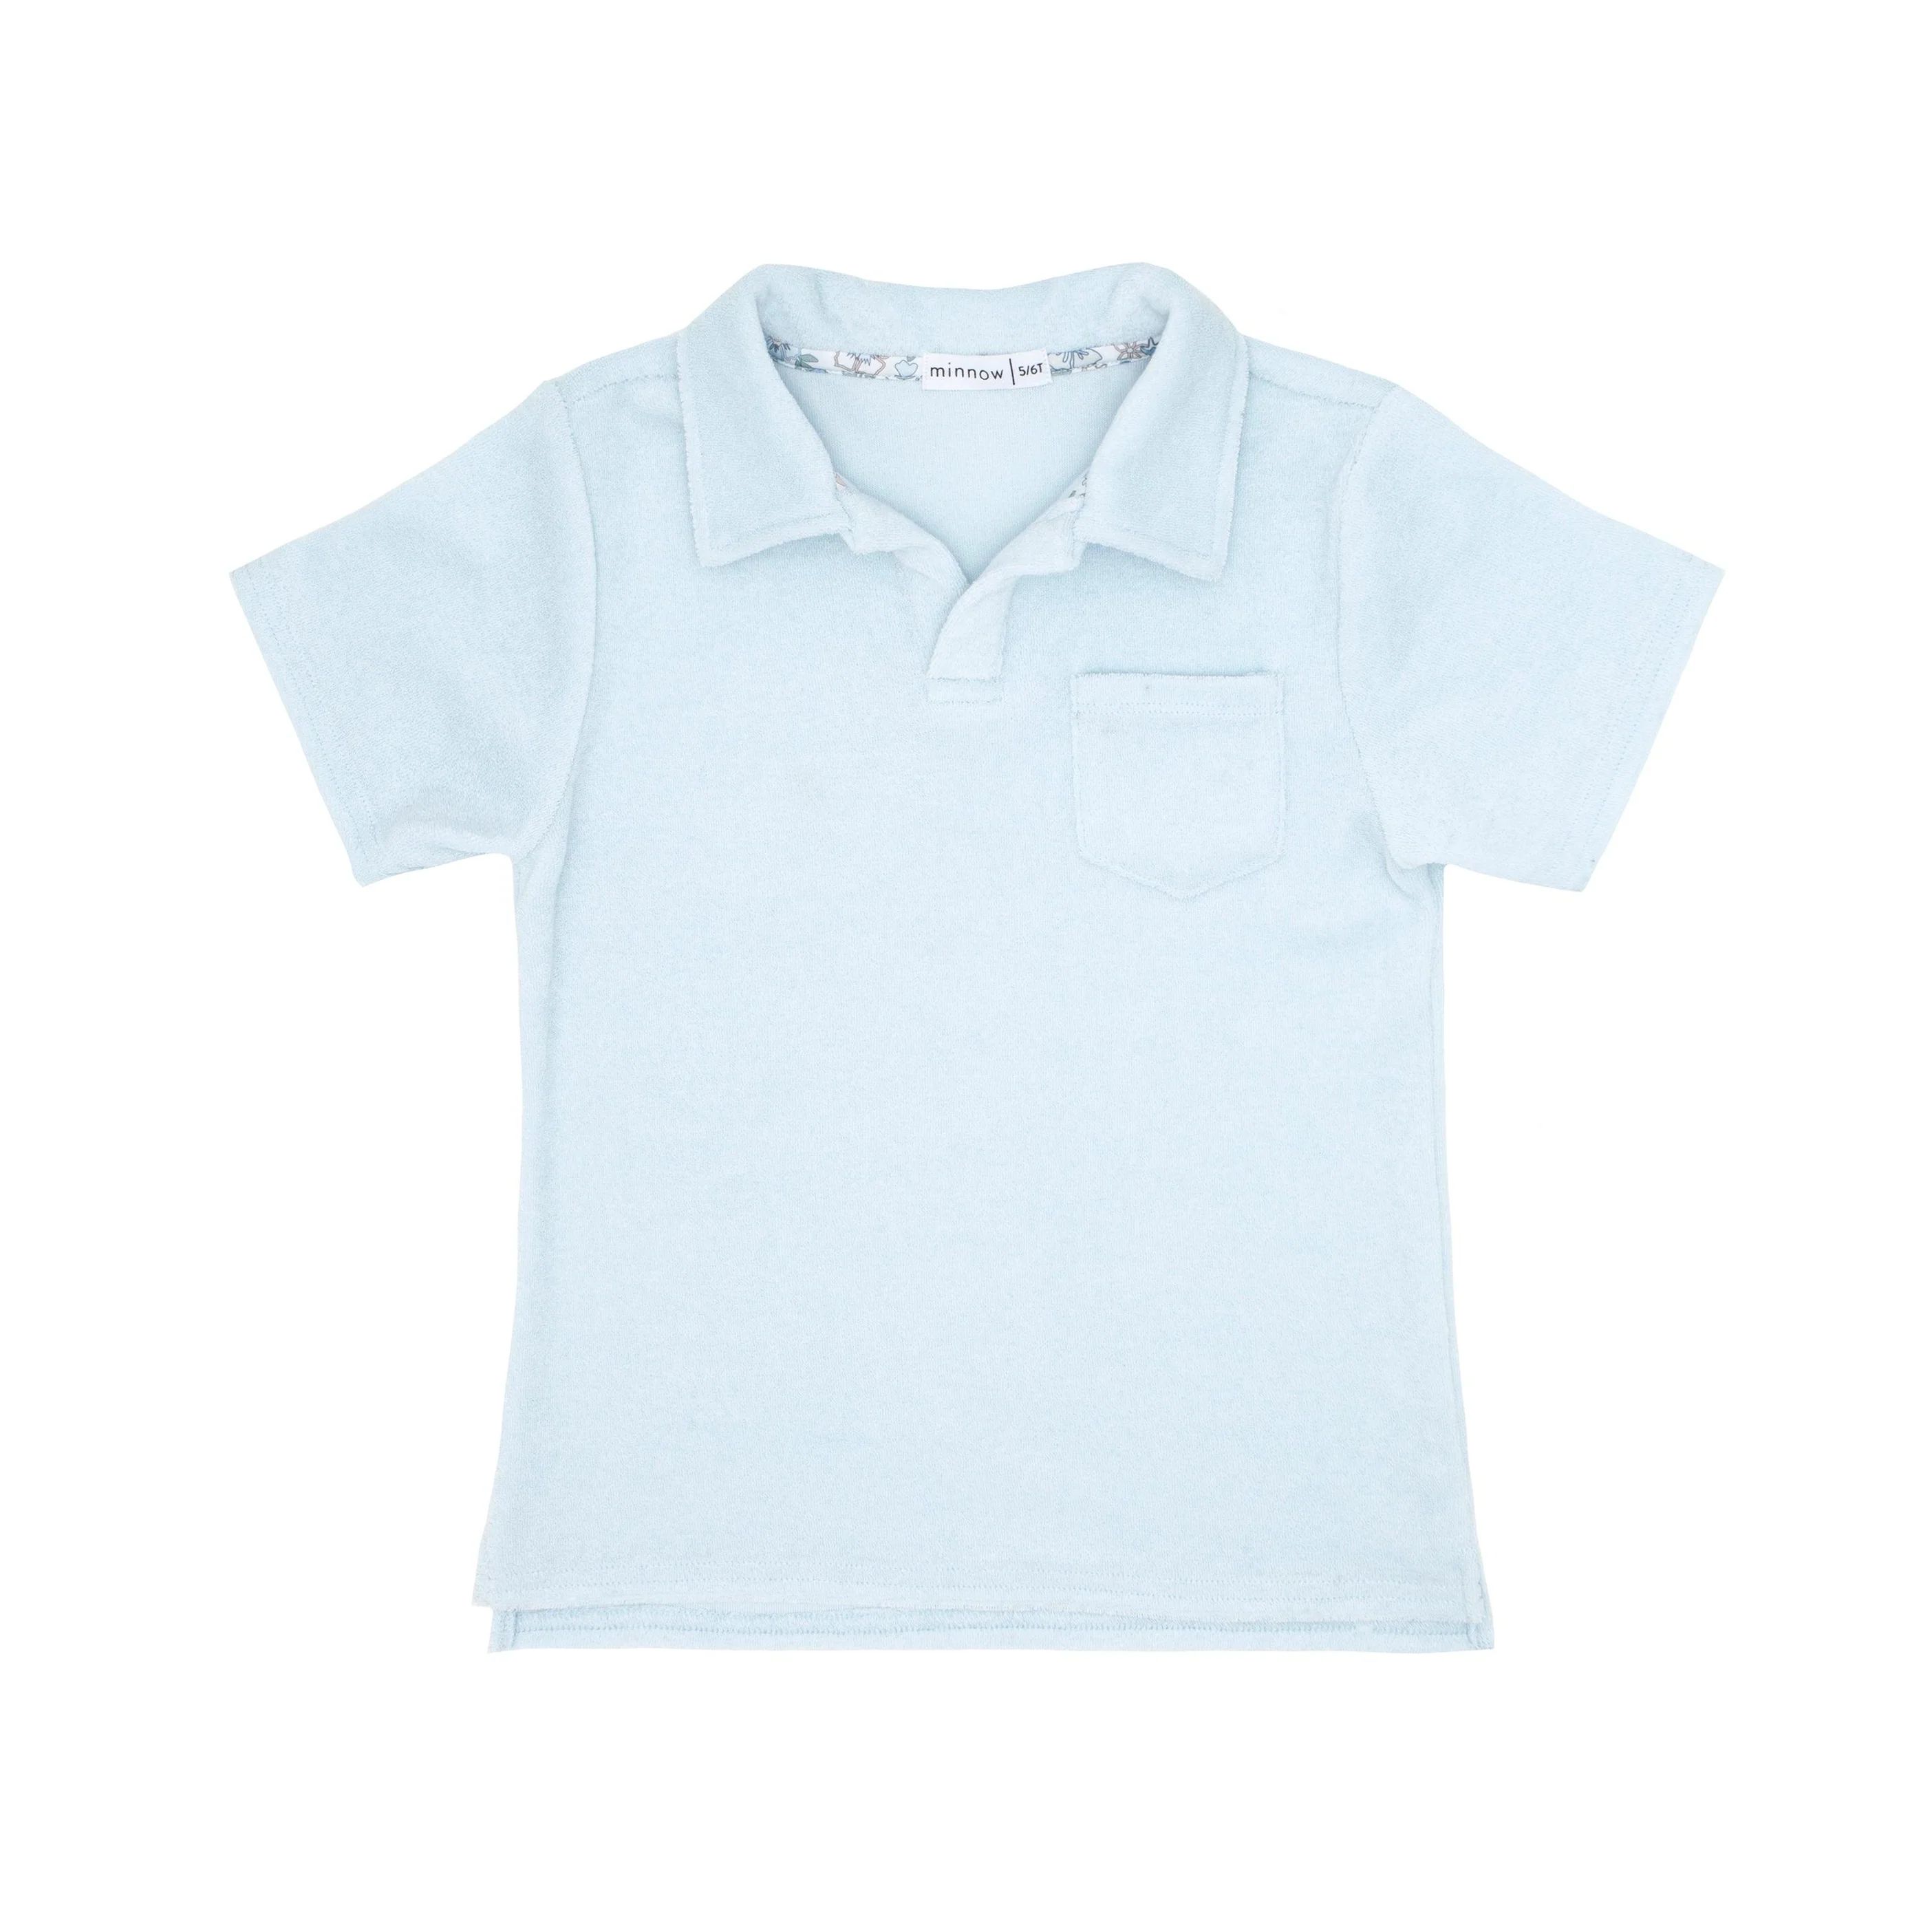 boys light blue french terry polo shirt | minnow